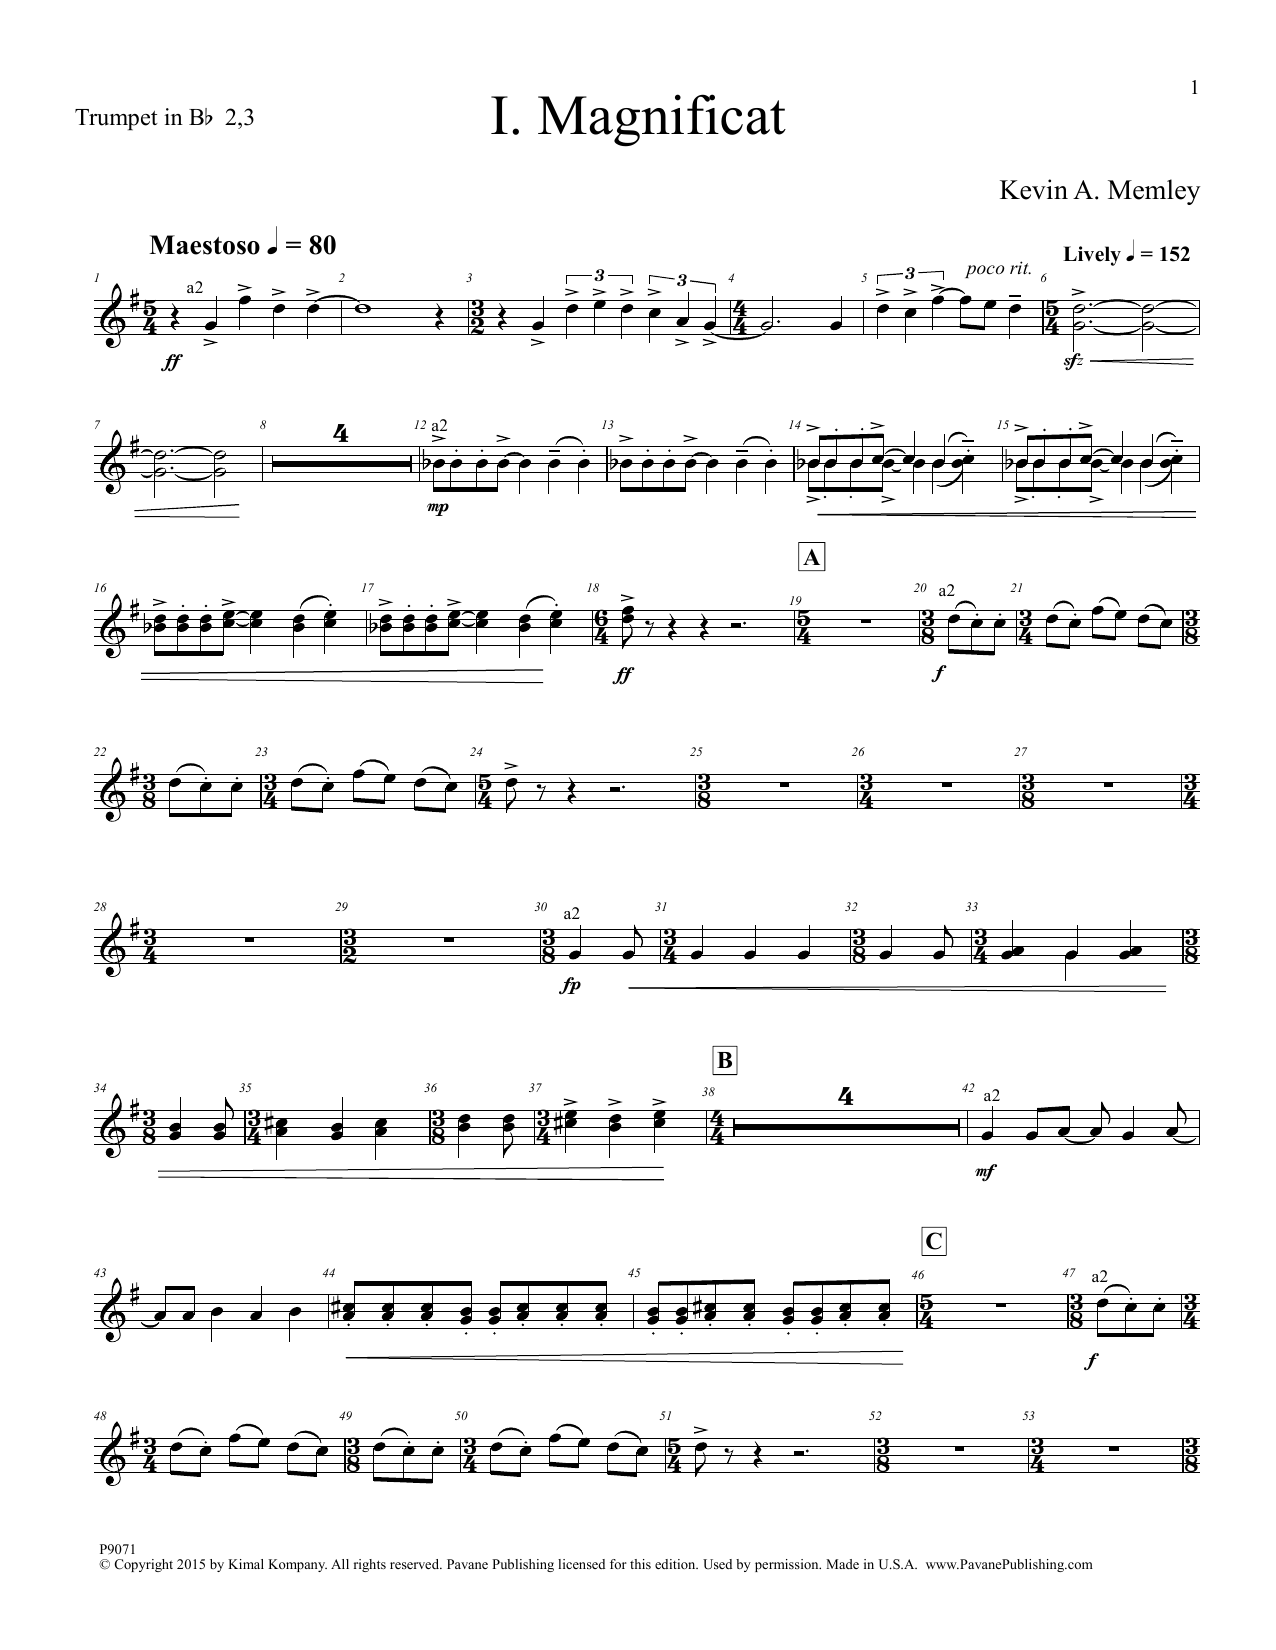 Download Kevin A. Memley Magnificat - Trumpet 2, 3 Sheet Music